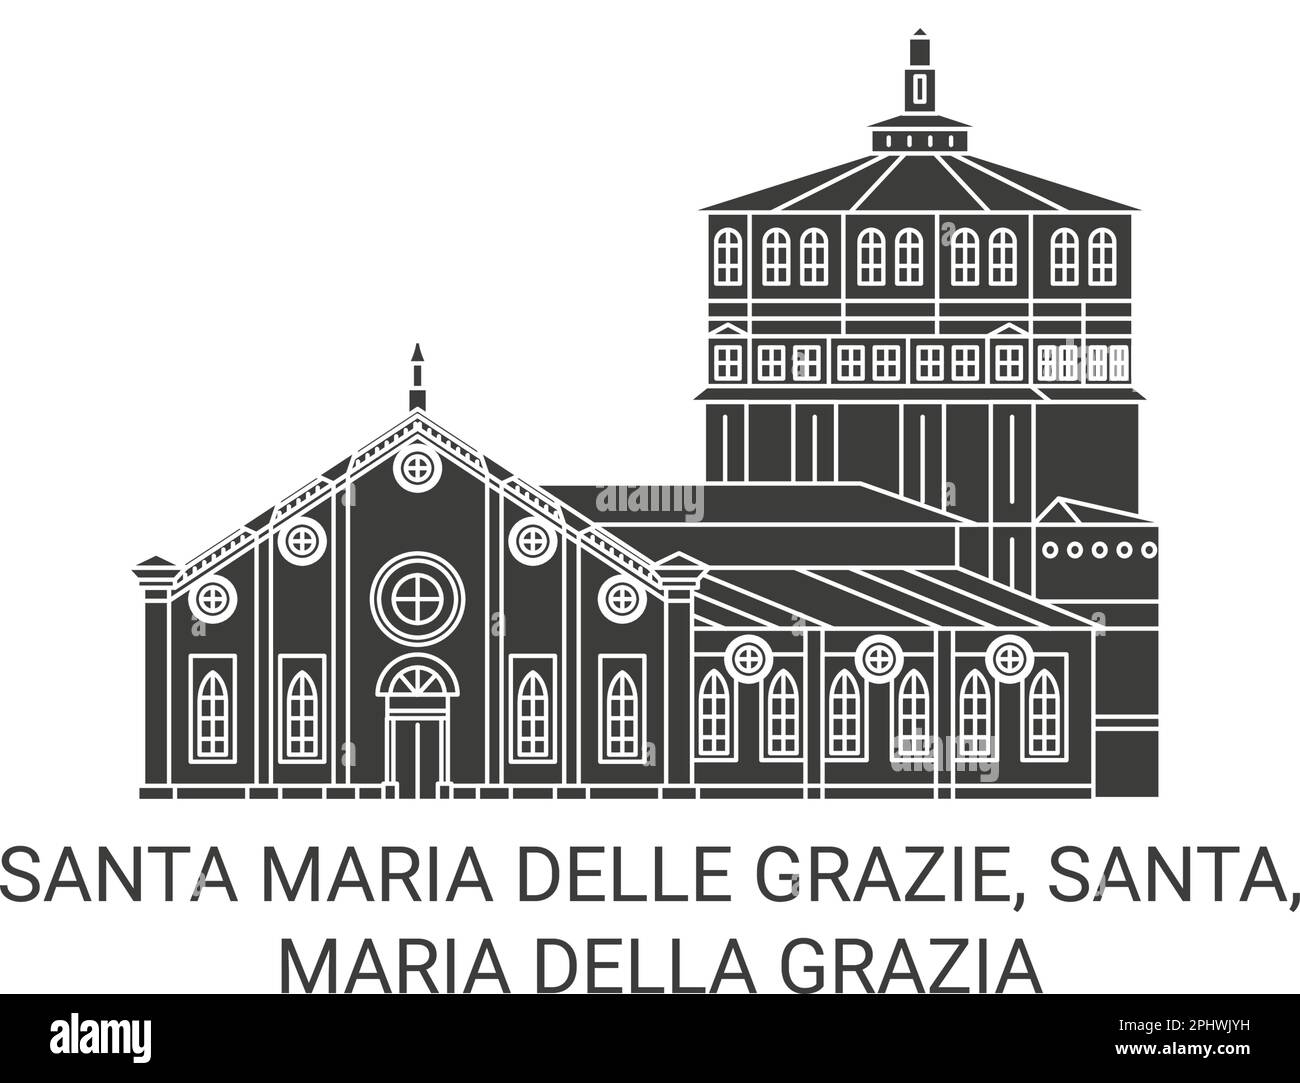 Italie, Santa Maria Delle Grazie, Santa, Maria Della Grazia Voyage repère illustration vecteur Illustration de Vecteur